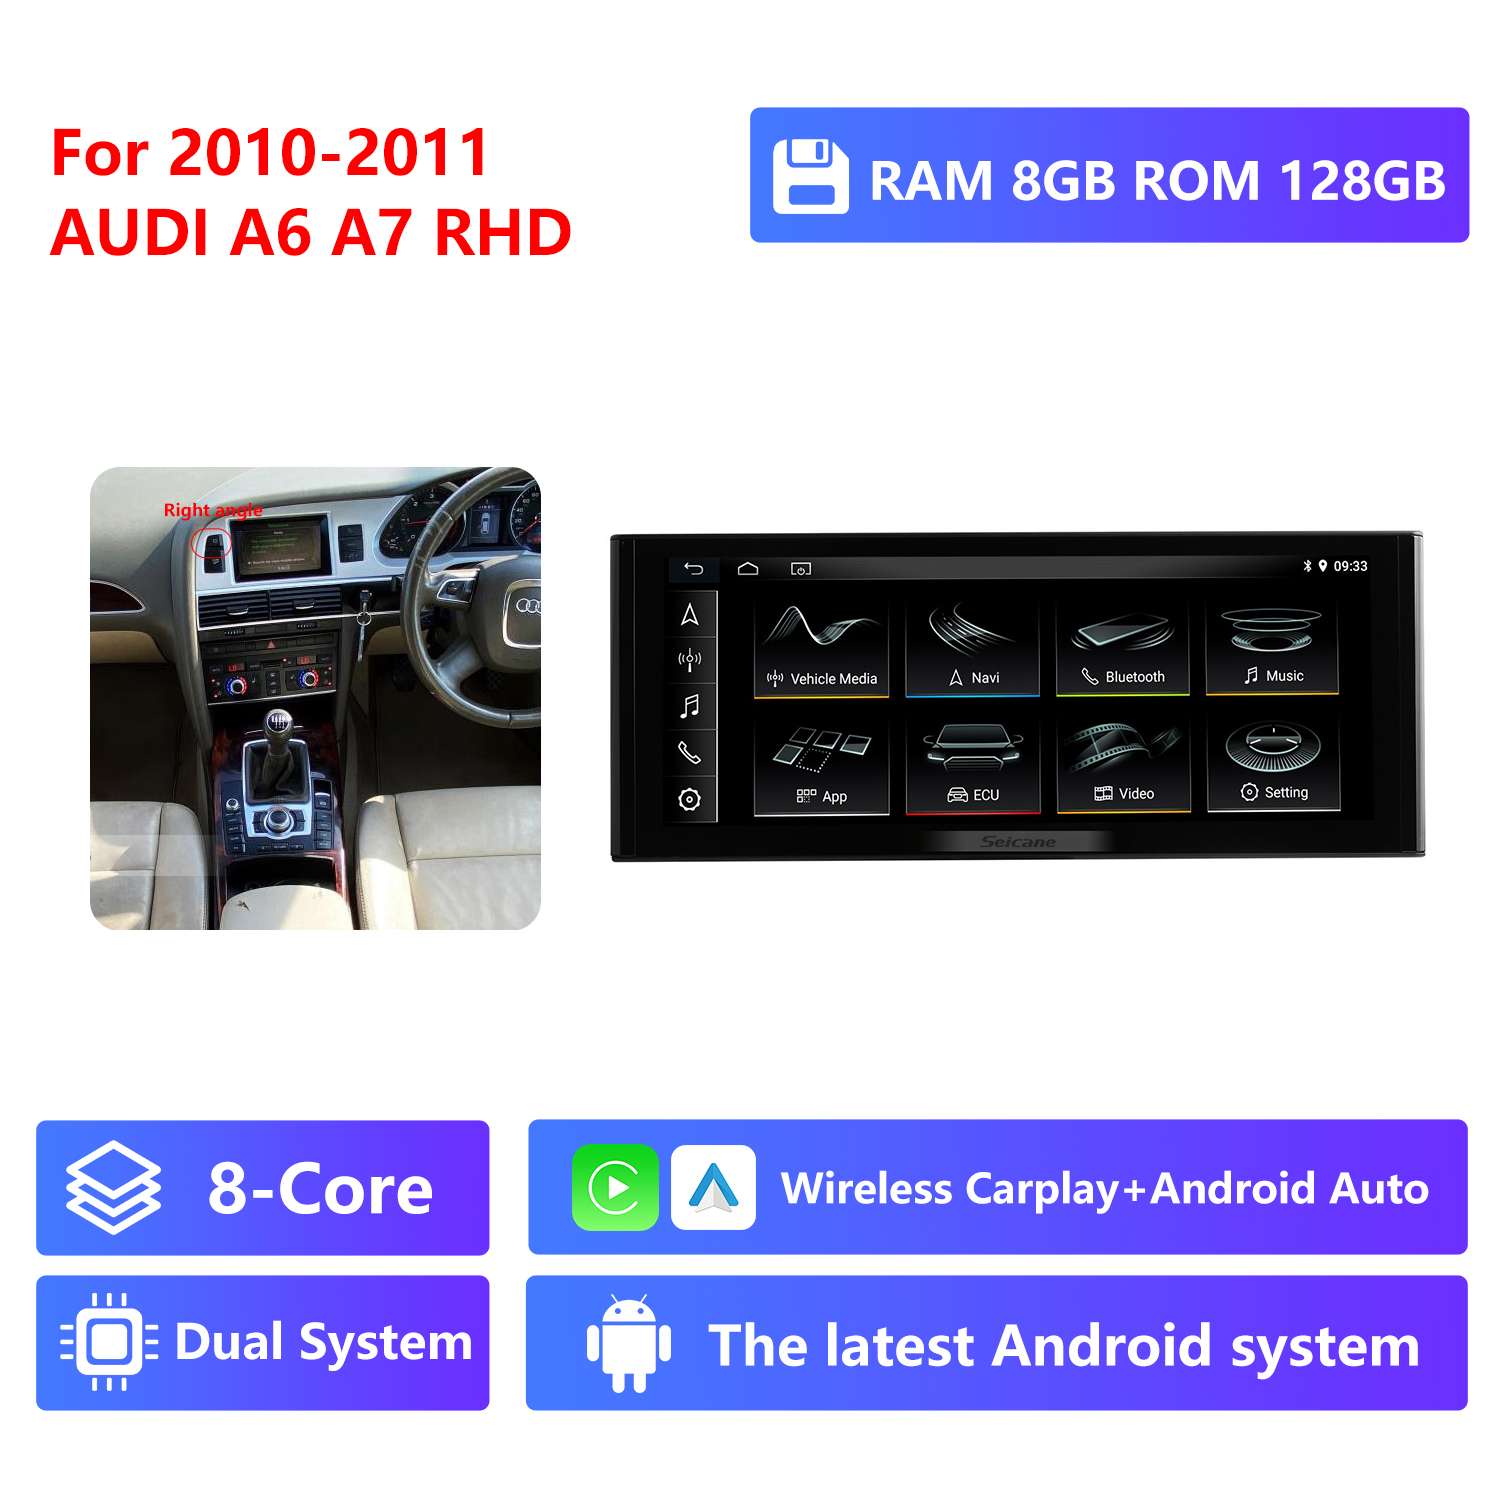 8-Core RAM 8G ROM 128G,2010-2011,RHD